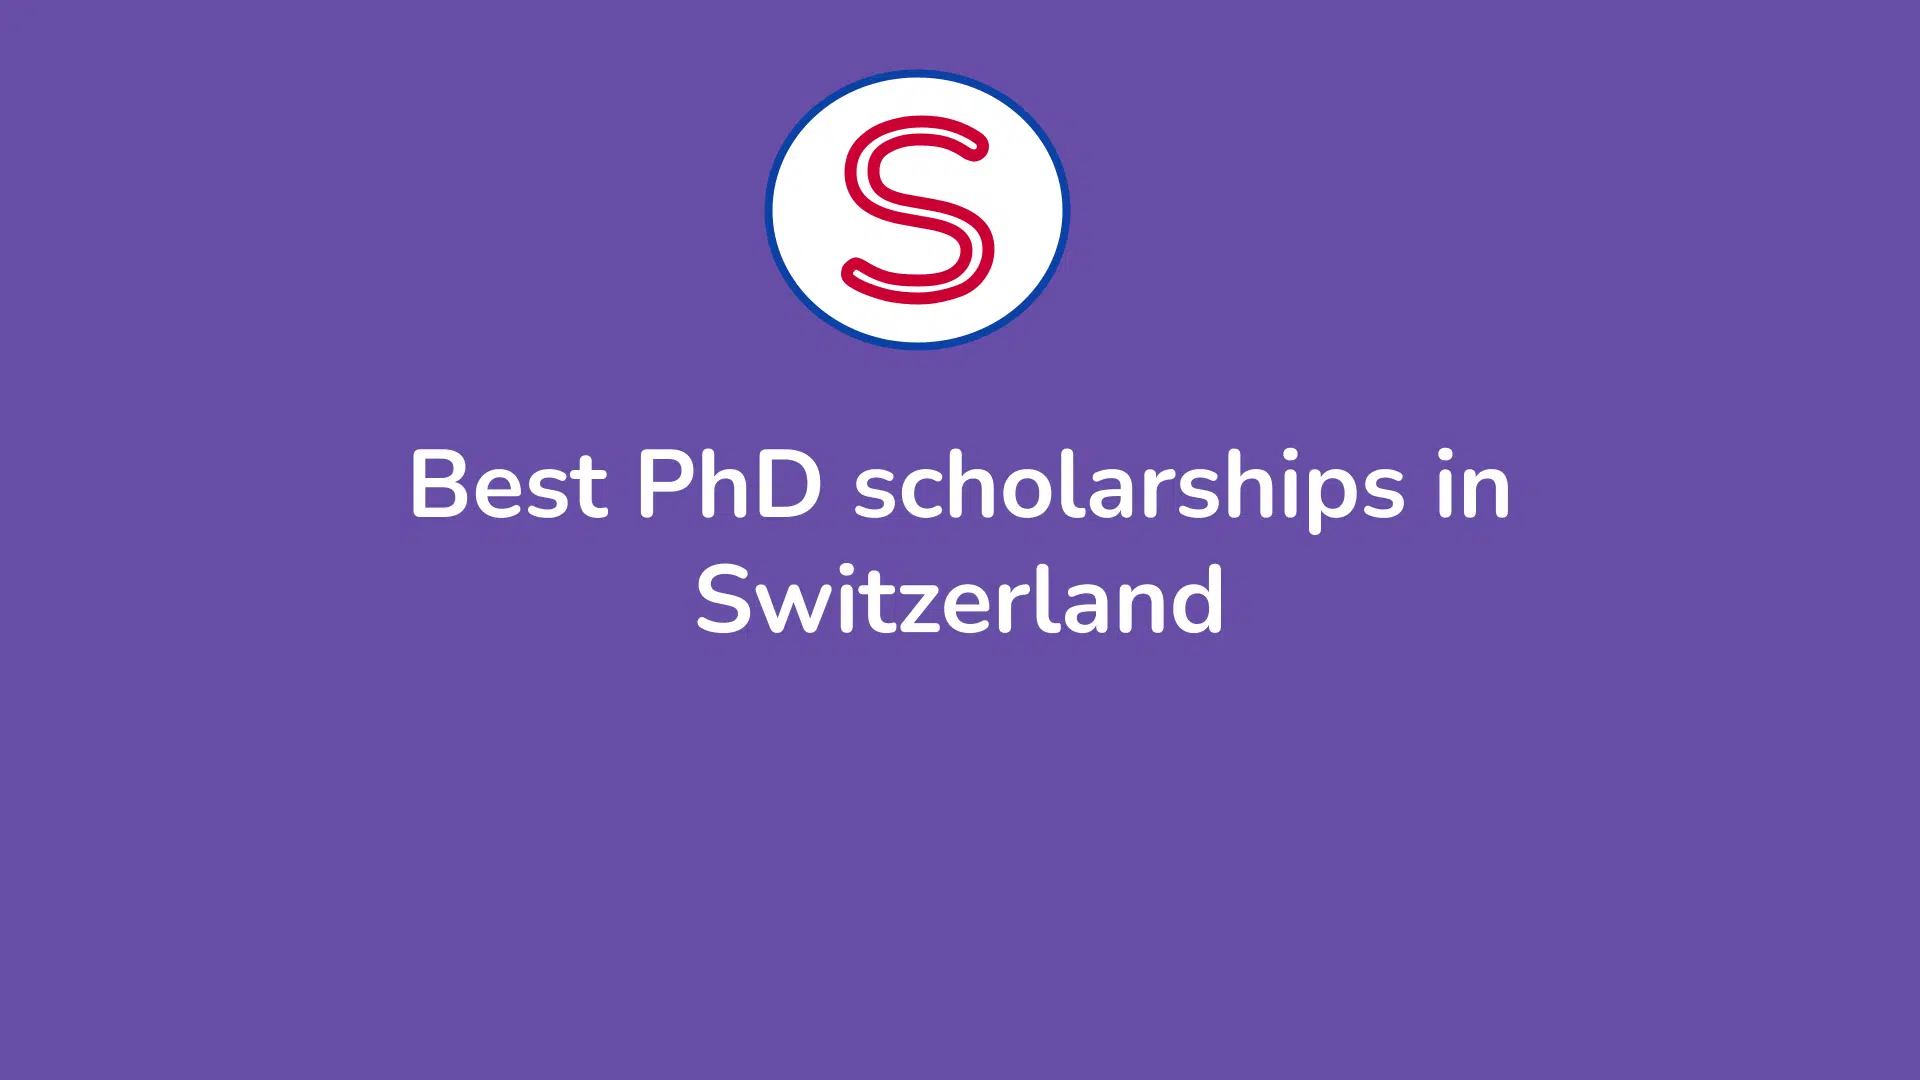 PhD scholarships in Switzerland